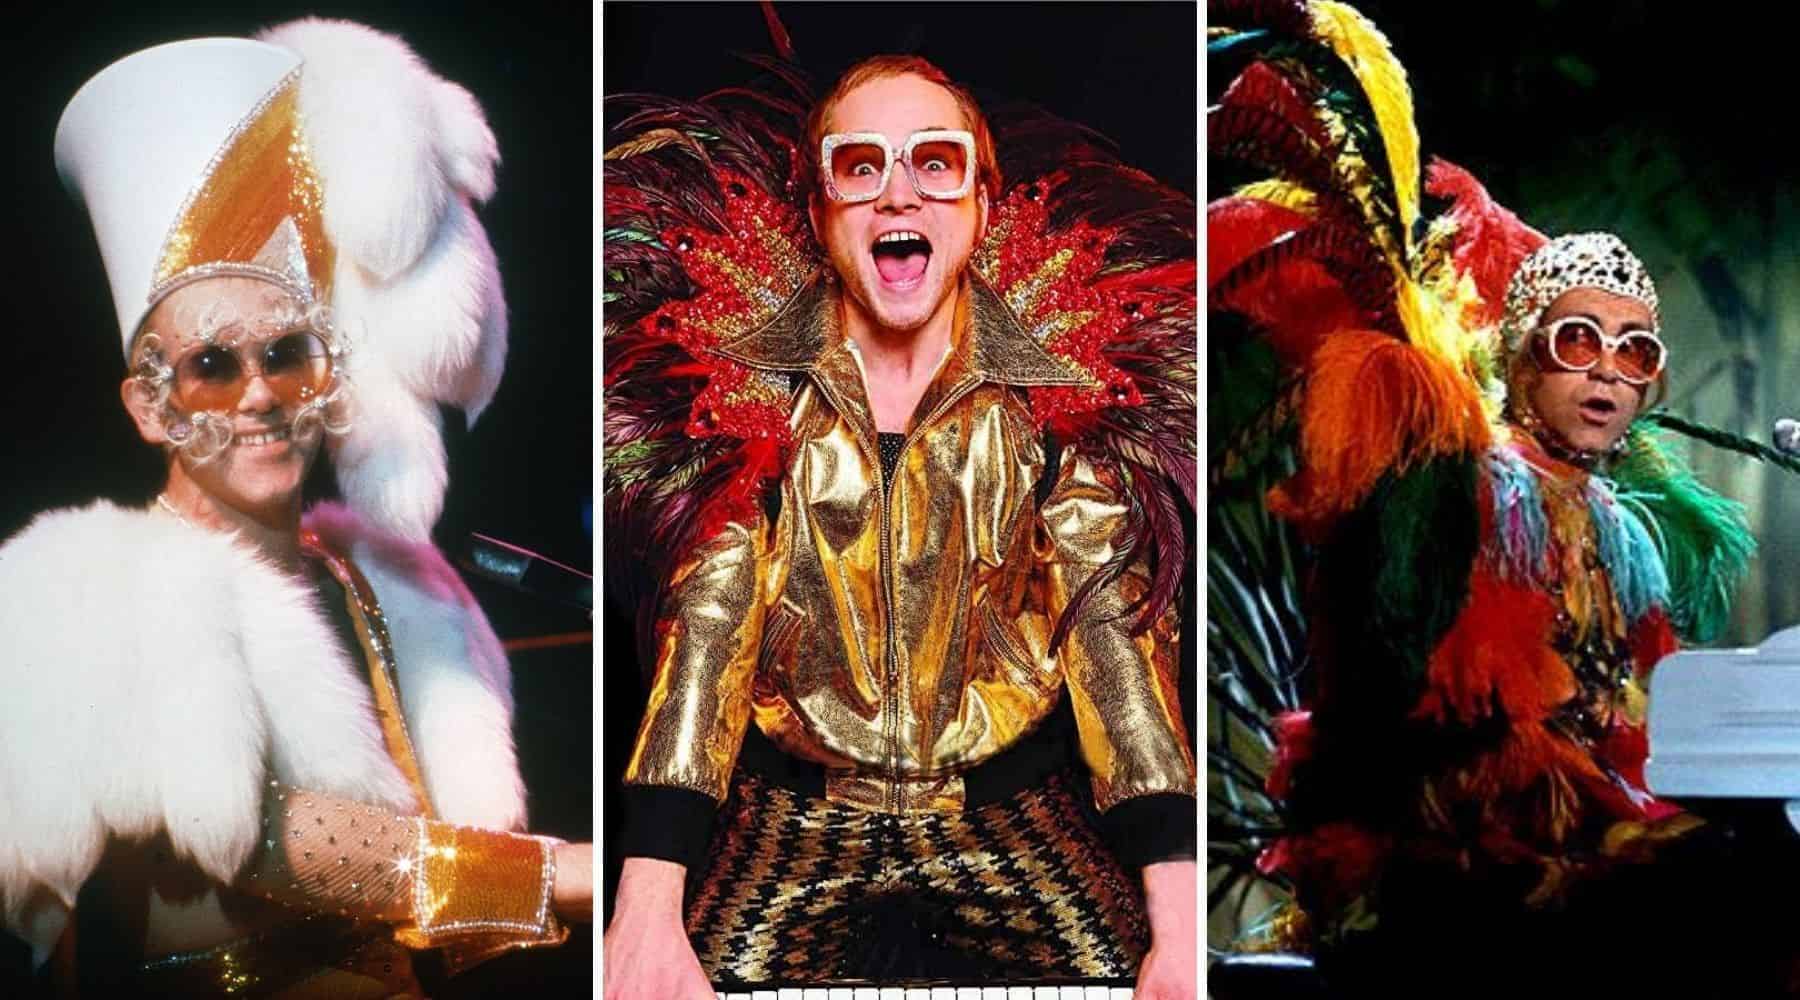 Elton John Stage Costumes and Sunglasses